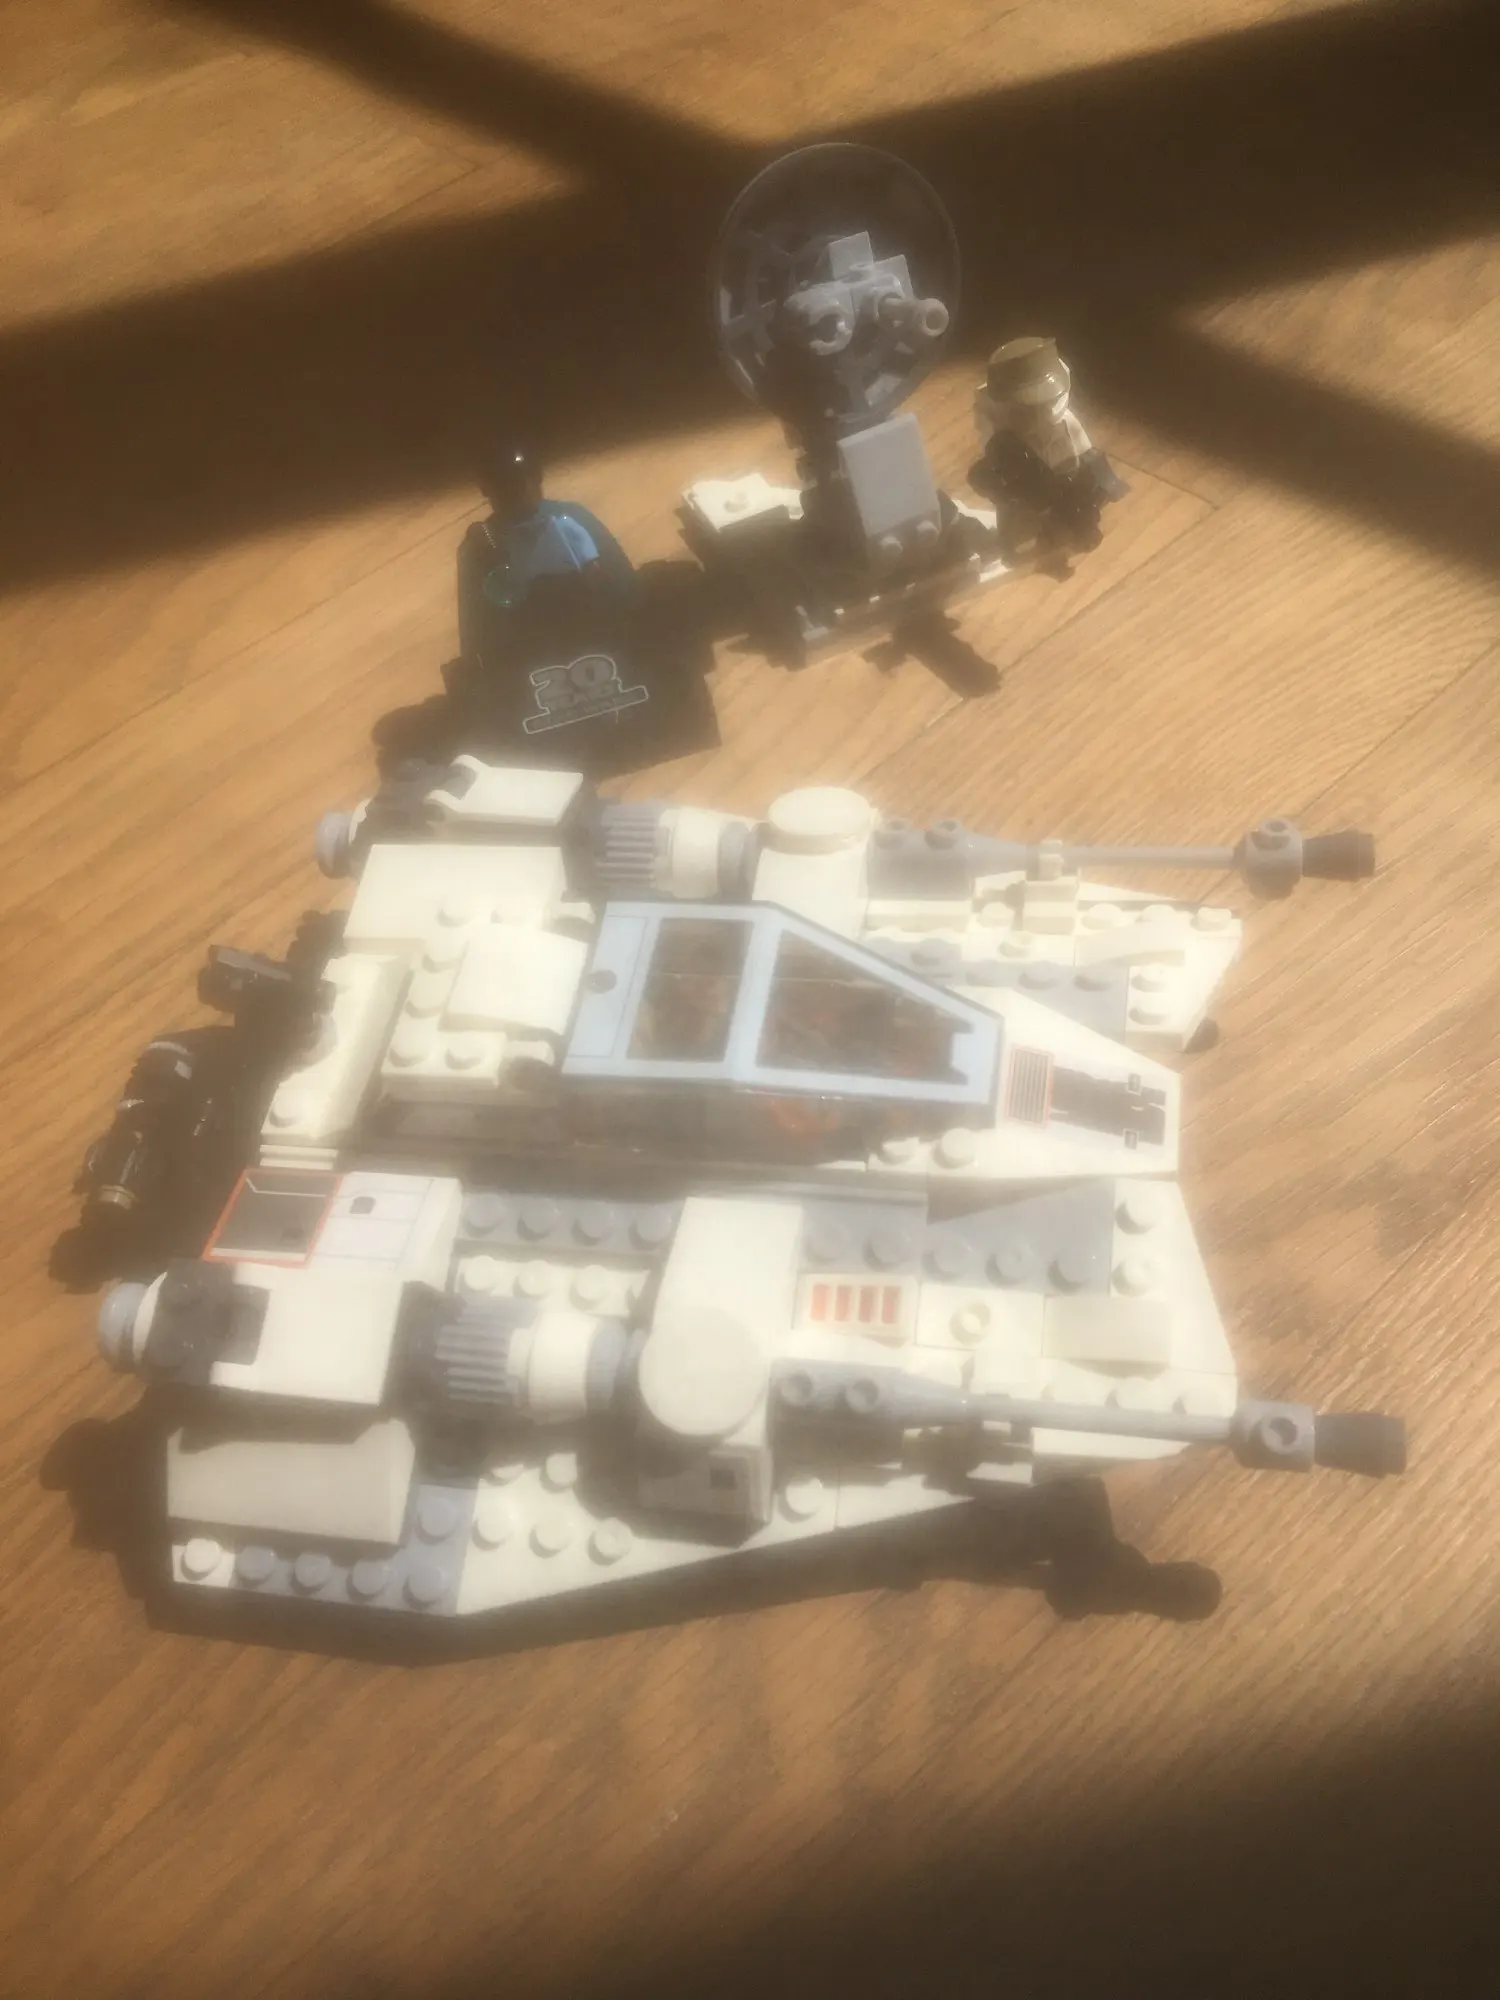 Star Wars 333PCS Building Blocks Star Space Ship Model Toys for Kids gift New